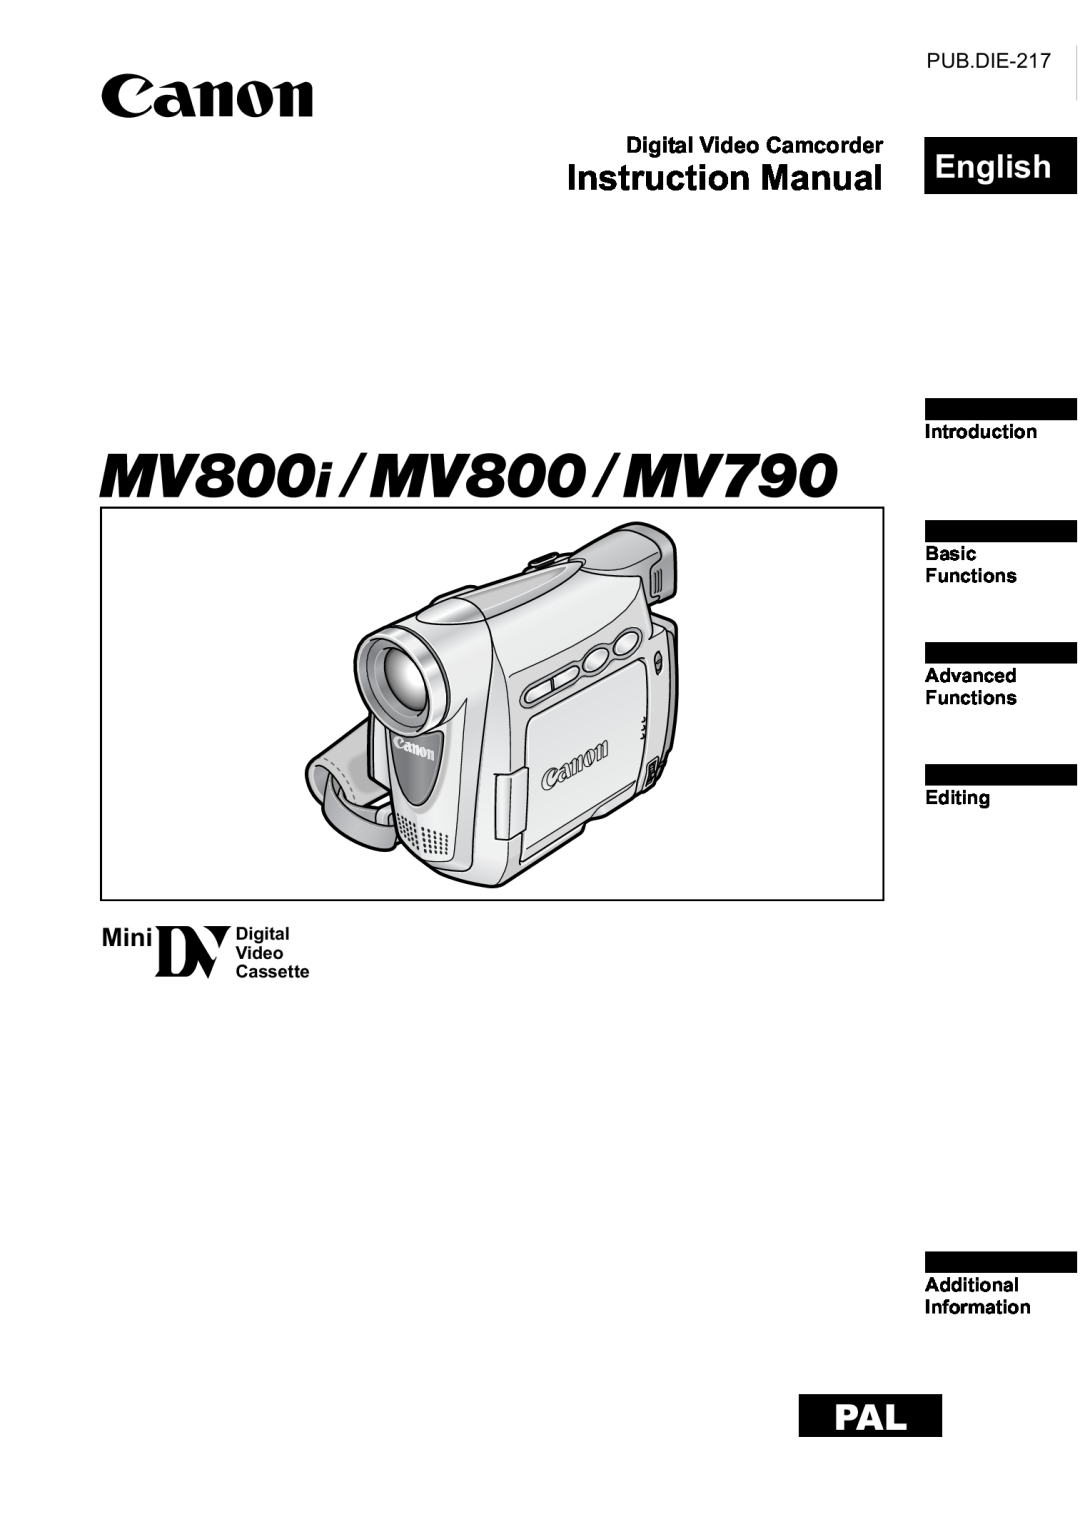 Canon MV800i, MV790 instruction manual English English, Digital Video Camcorder, Instruction Manual 